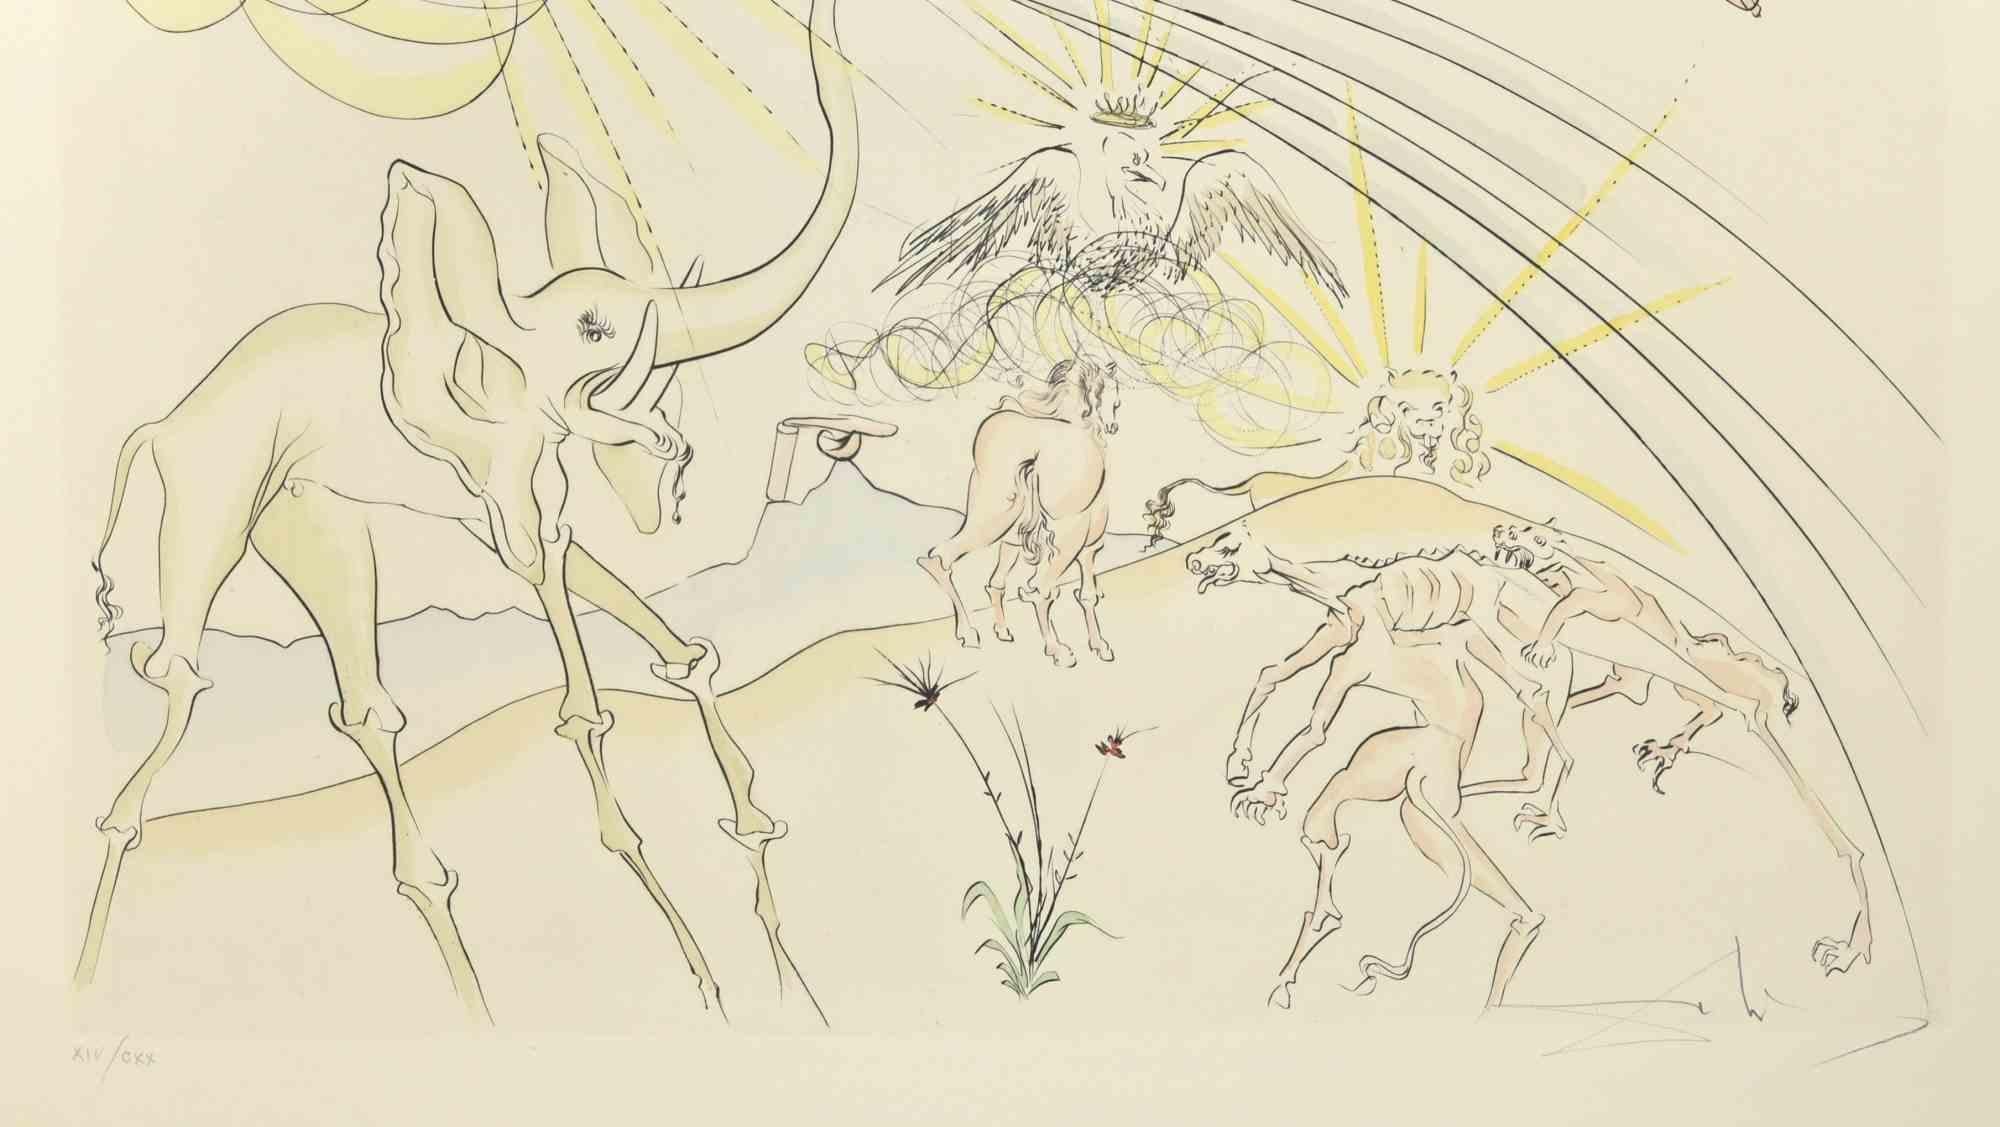 Plague-Stricken Animals - Etching  - 1974 - Print by Salvador Dalí